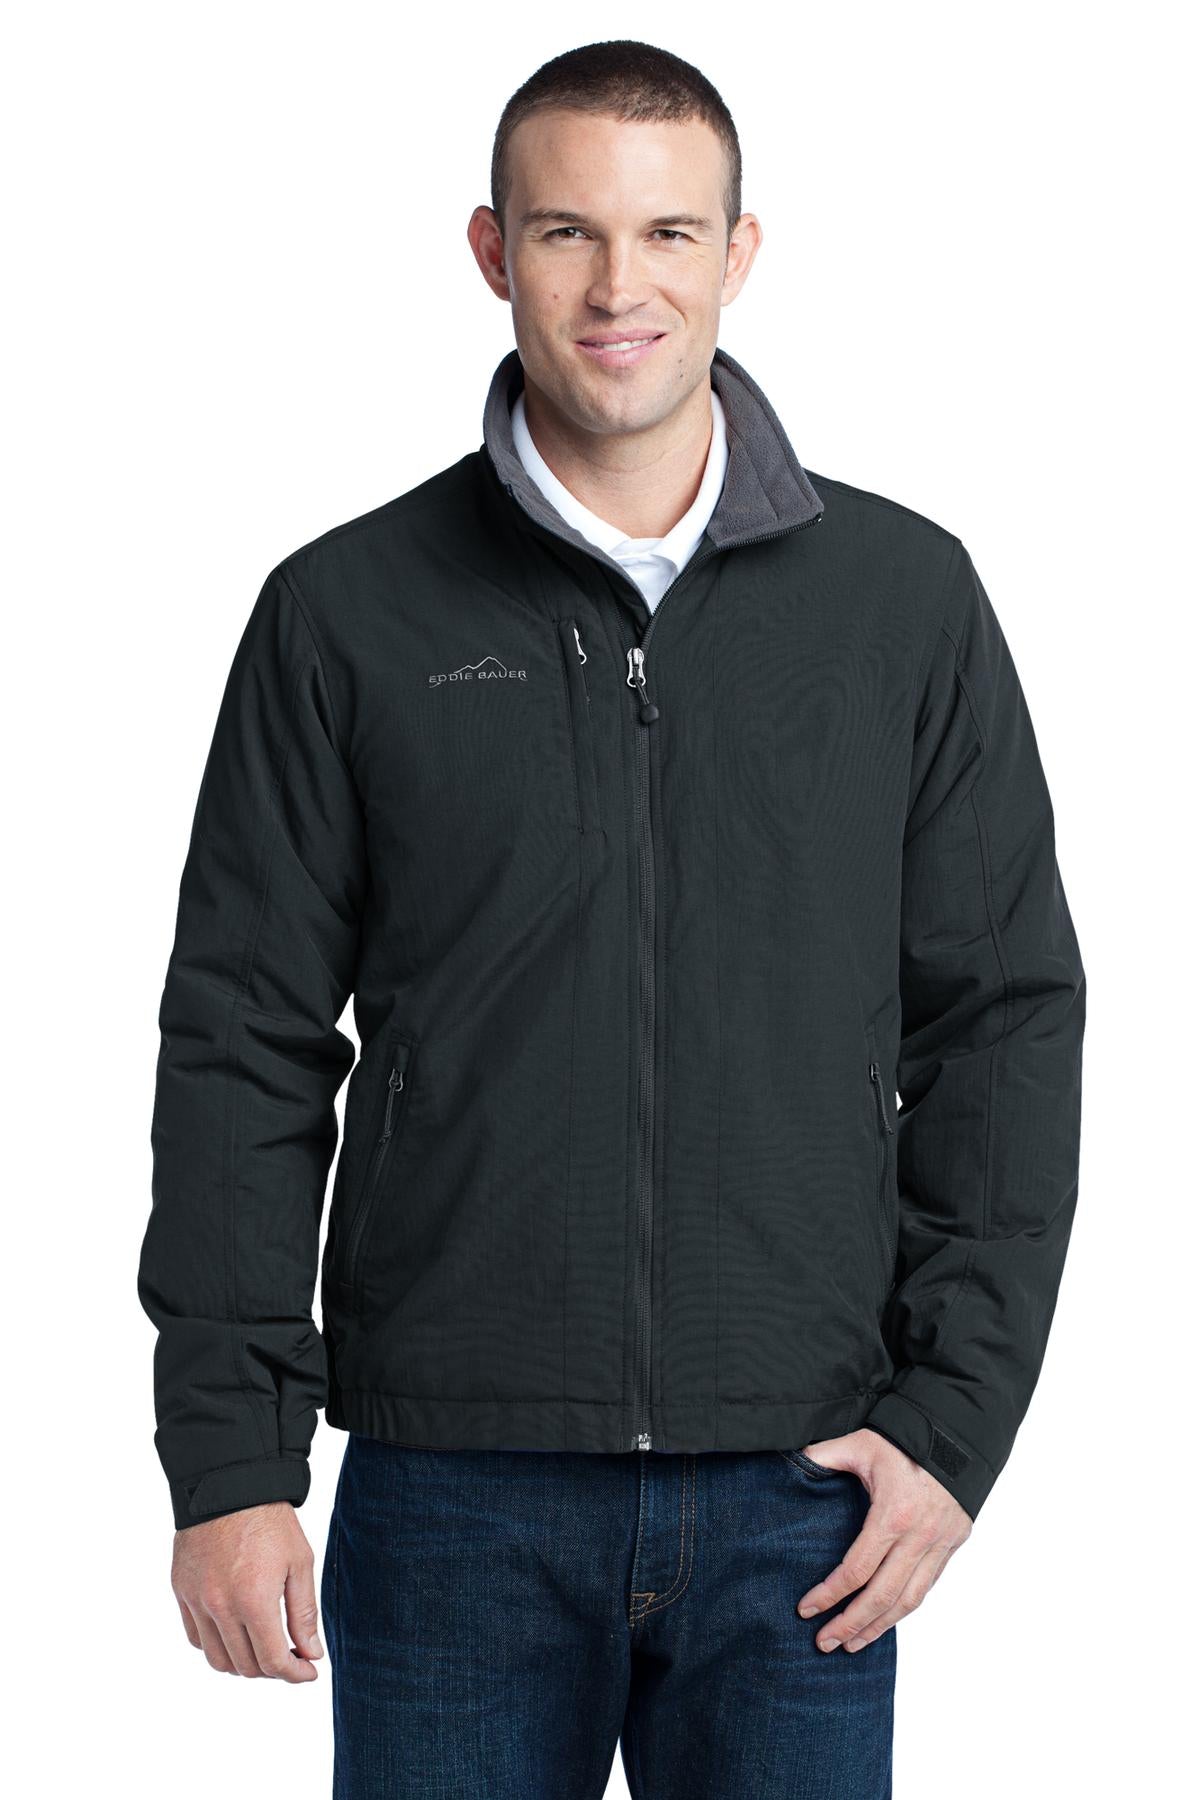 Eddie Bauer® - Fleece-Lined Jacket. EB520 - DFW Impression